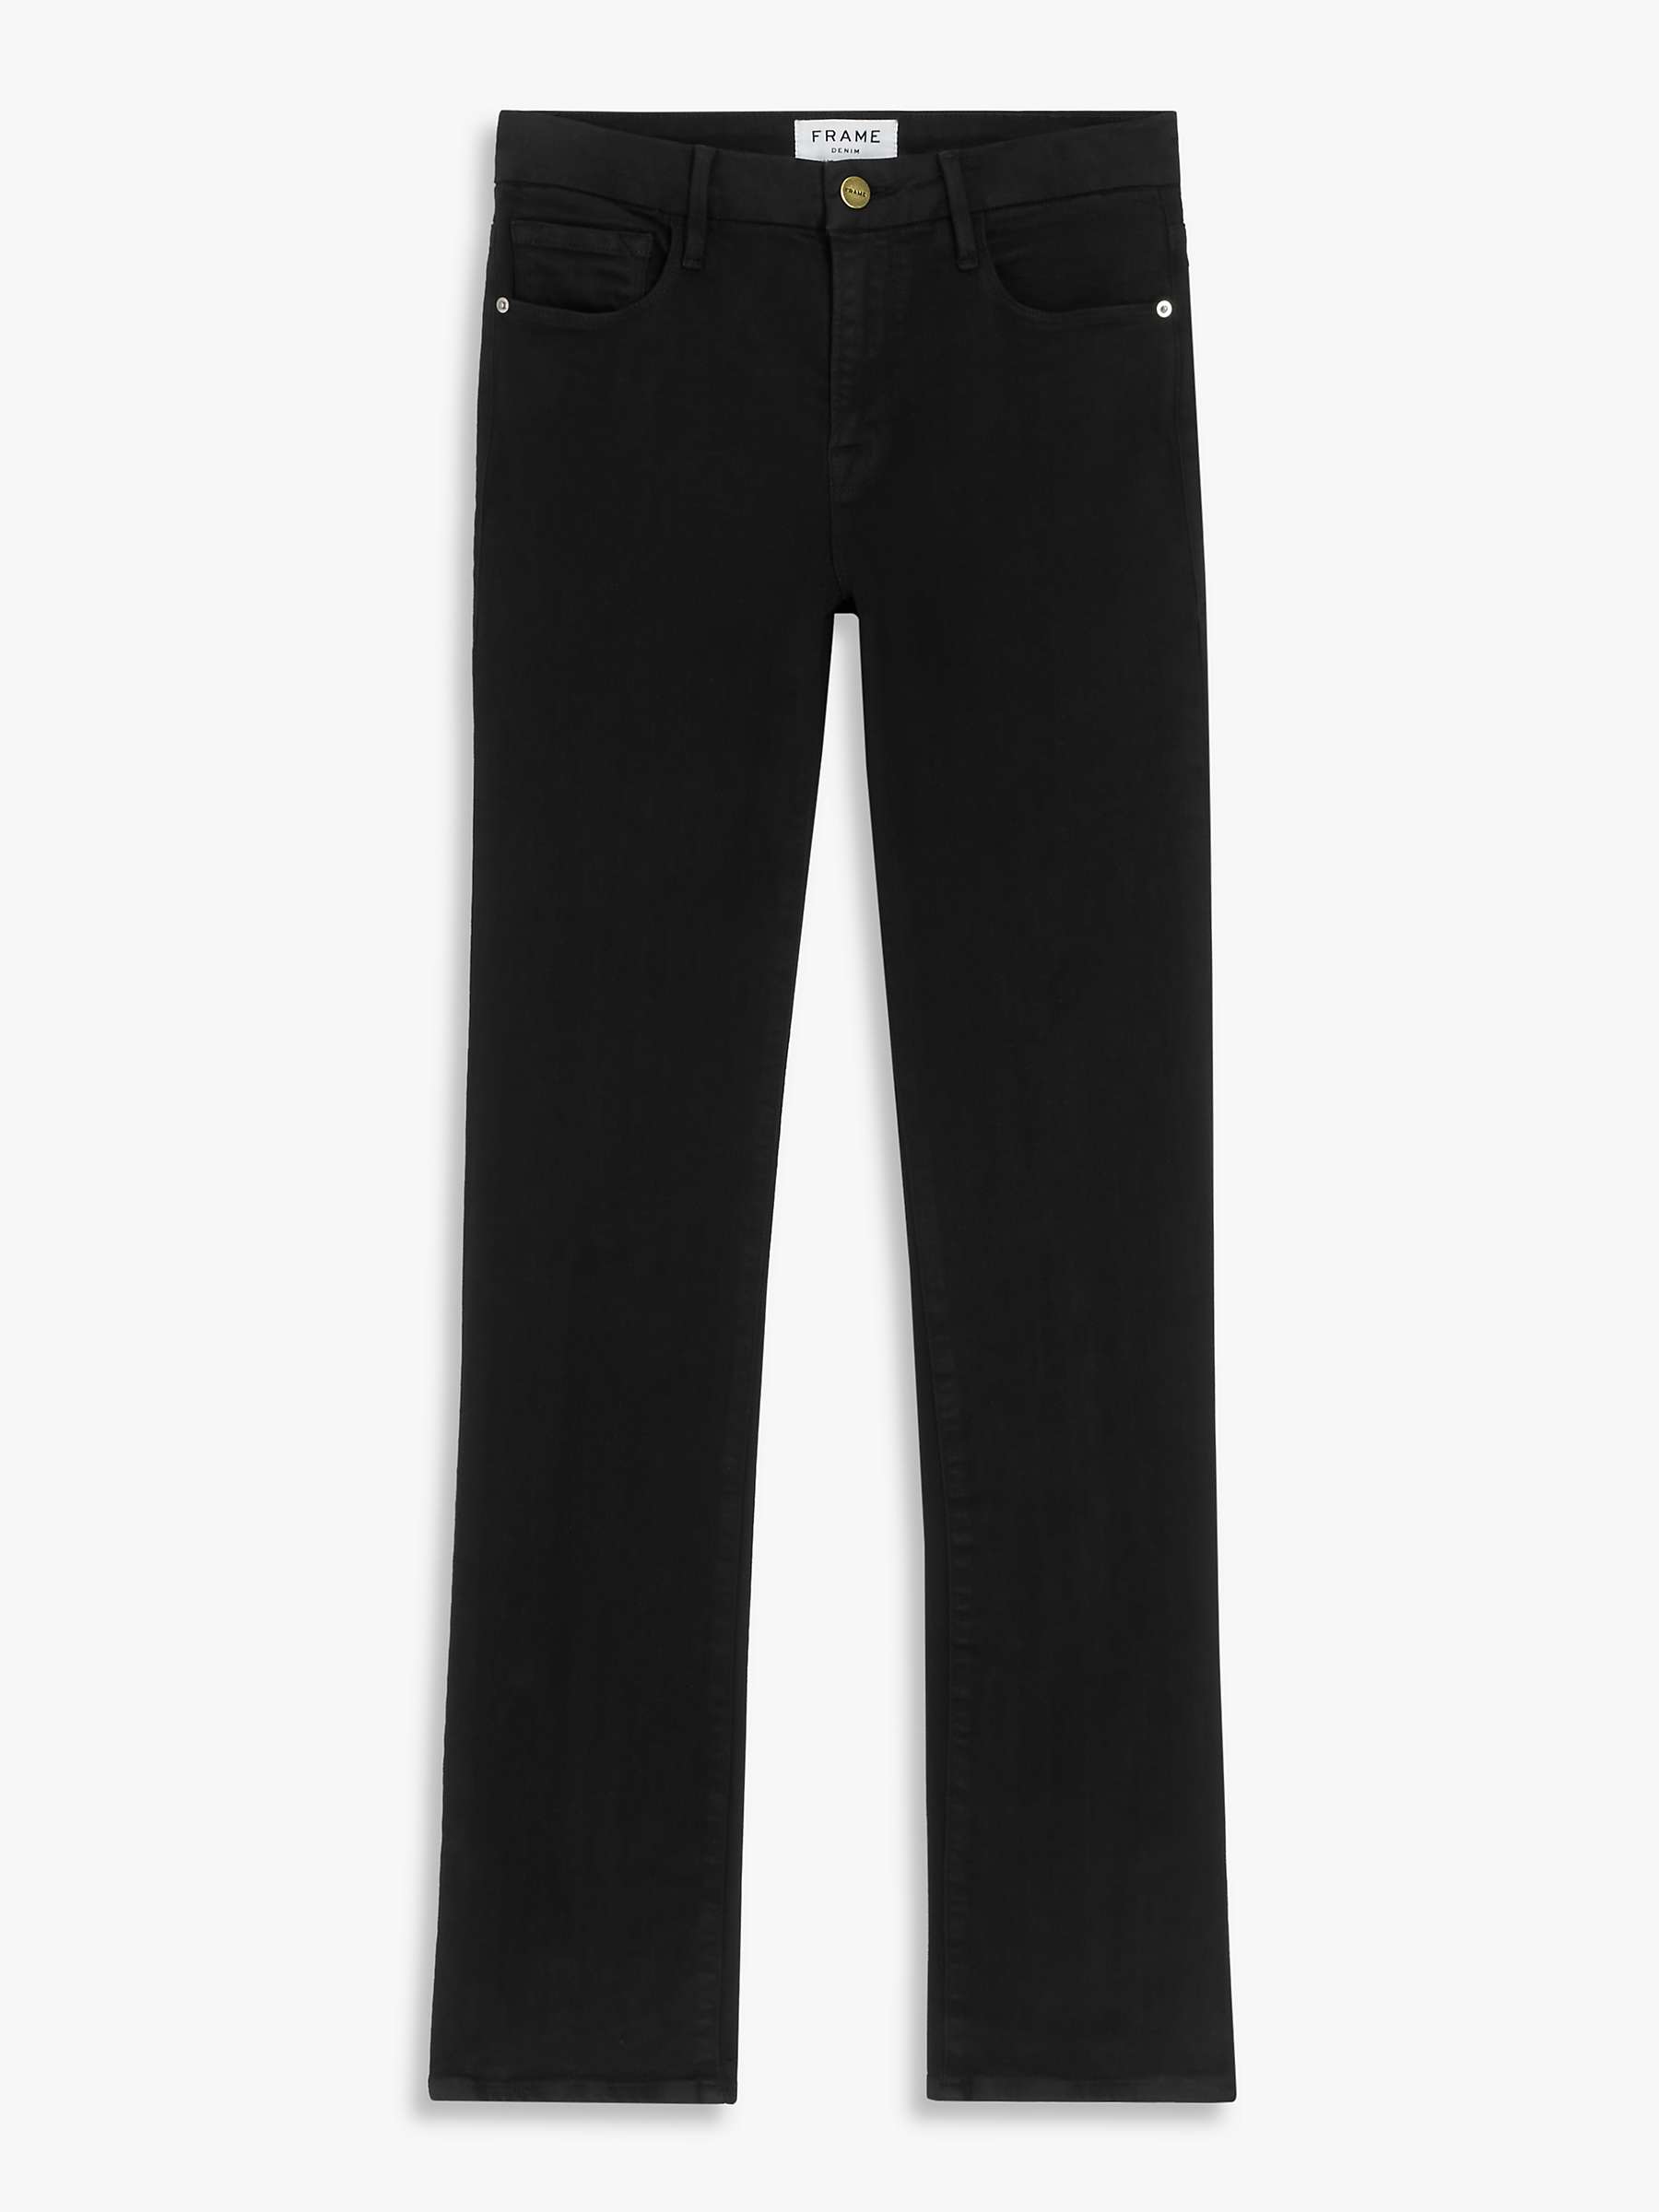 Buy FRAME Le Mini Bootcut Jeans, Black Online at johnlewis.com